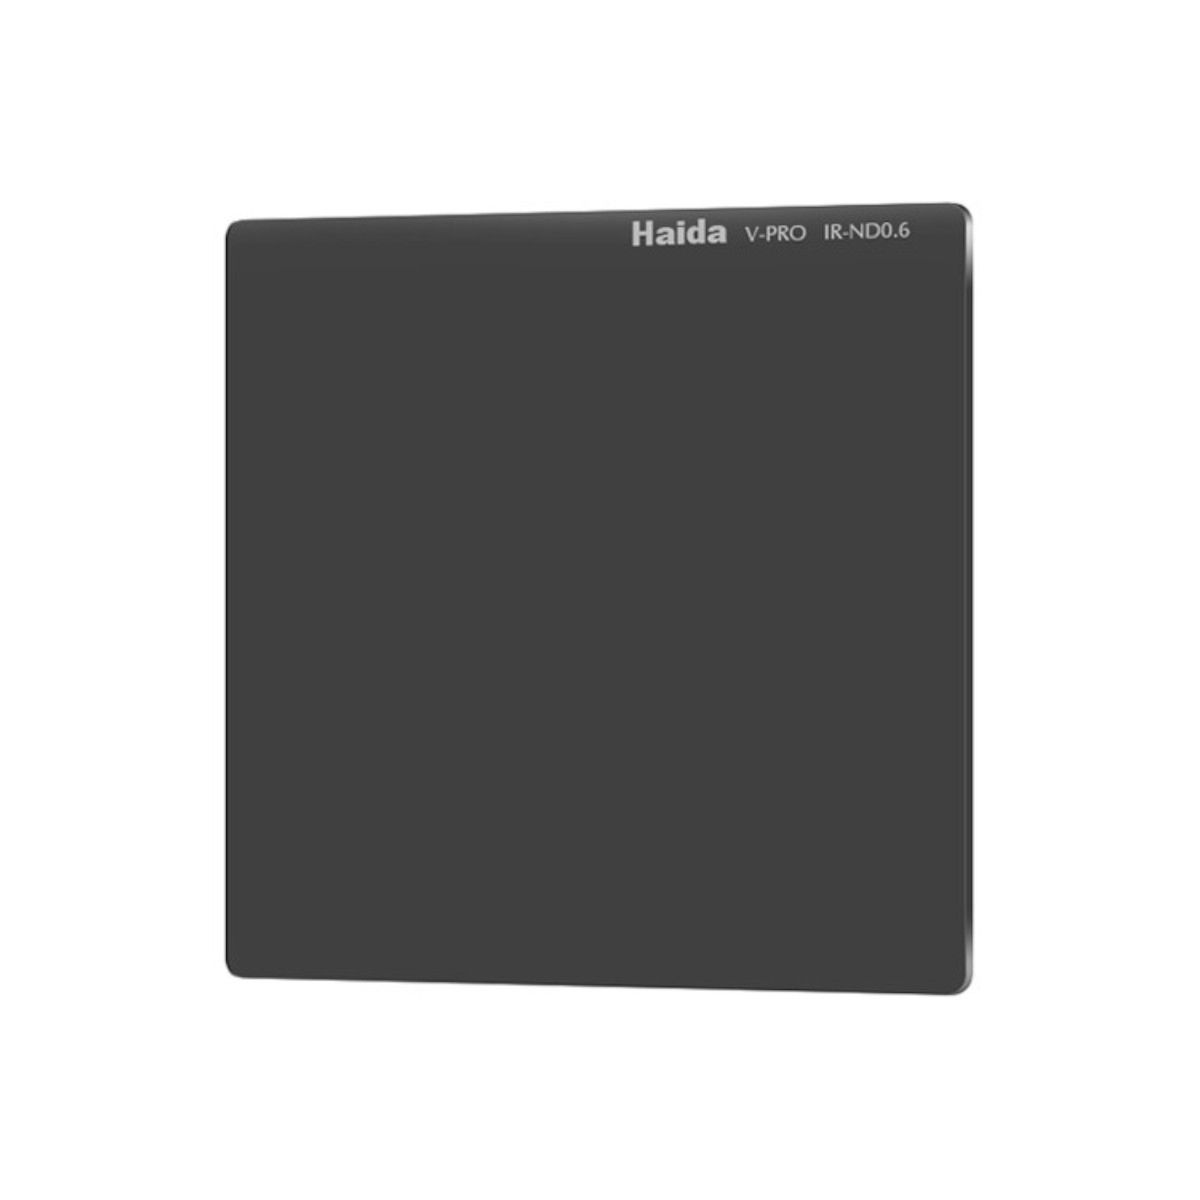 Haida HD3501 V PRO Series MC IR ND 0.6 4Mm Cinema Filter